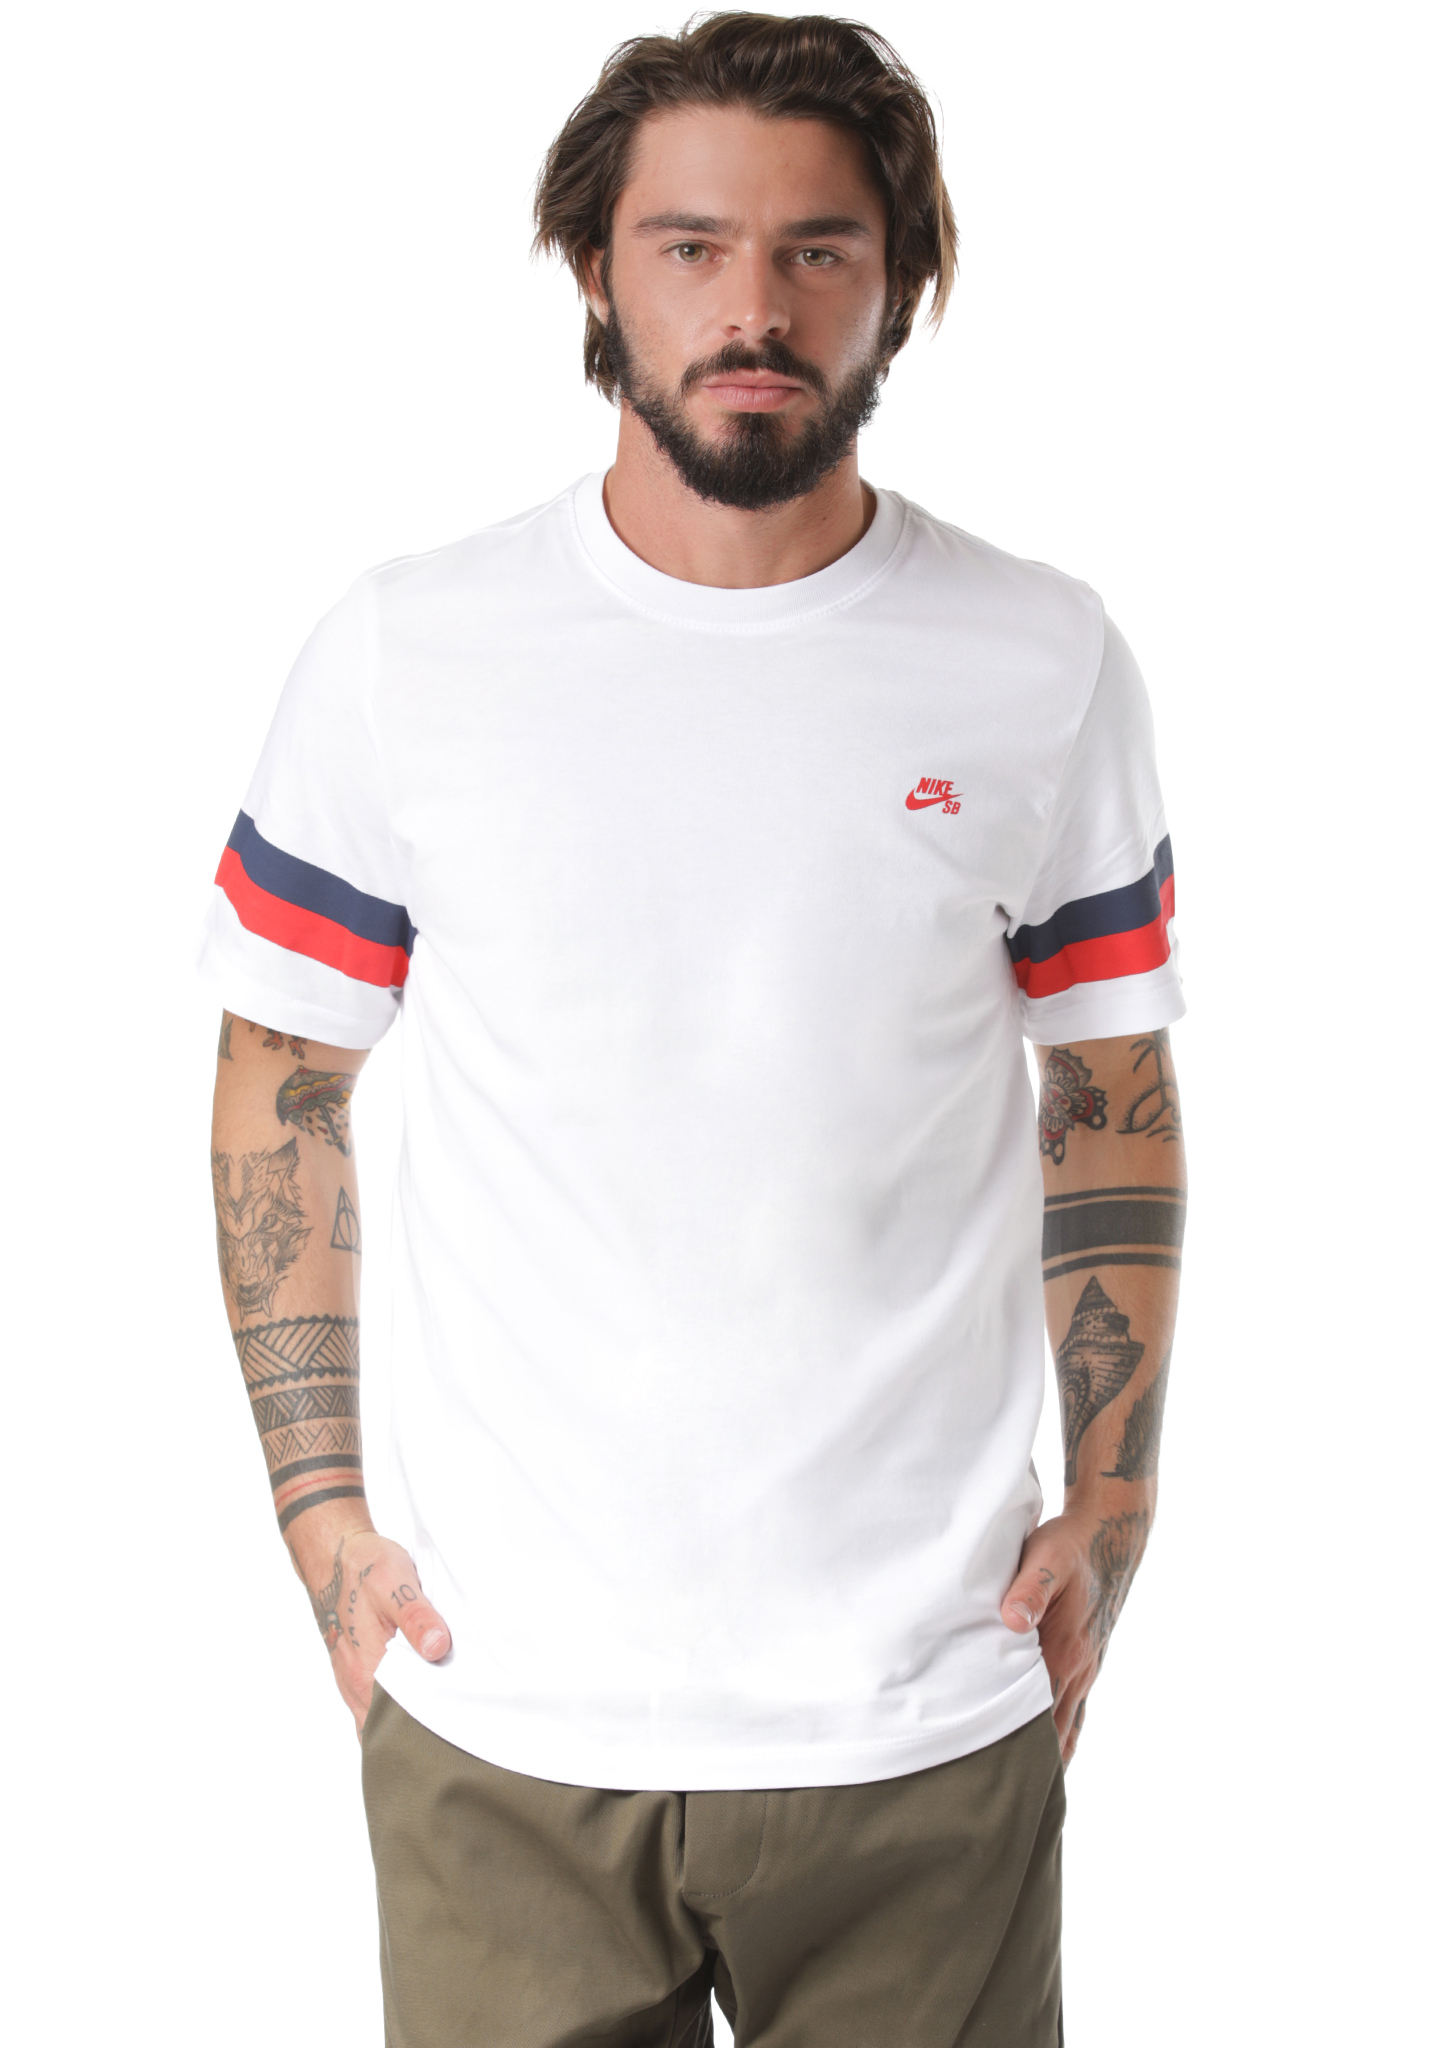 Nike Snowboarding Sleeve Stripe T-Shirt weiß/universitätsrot L